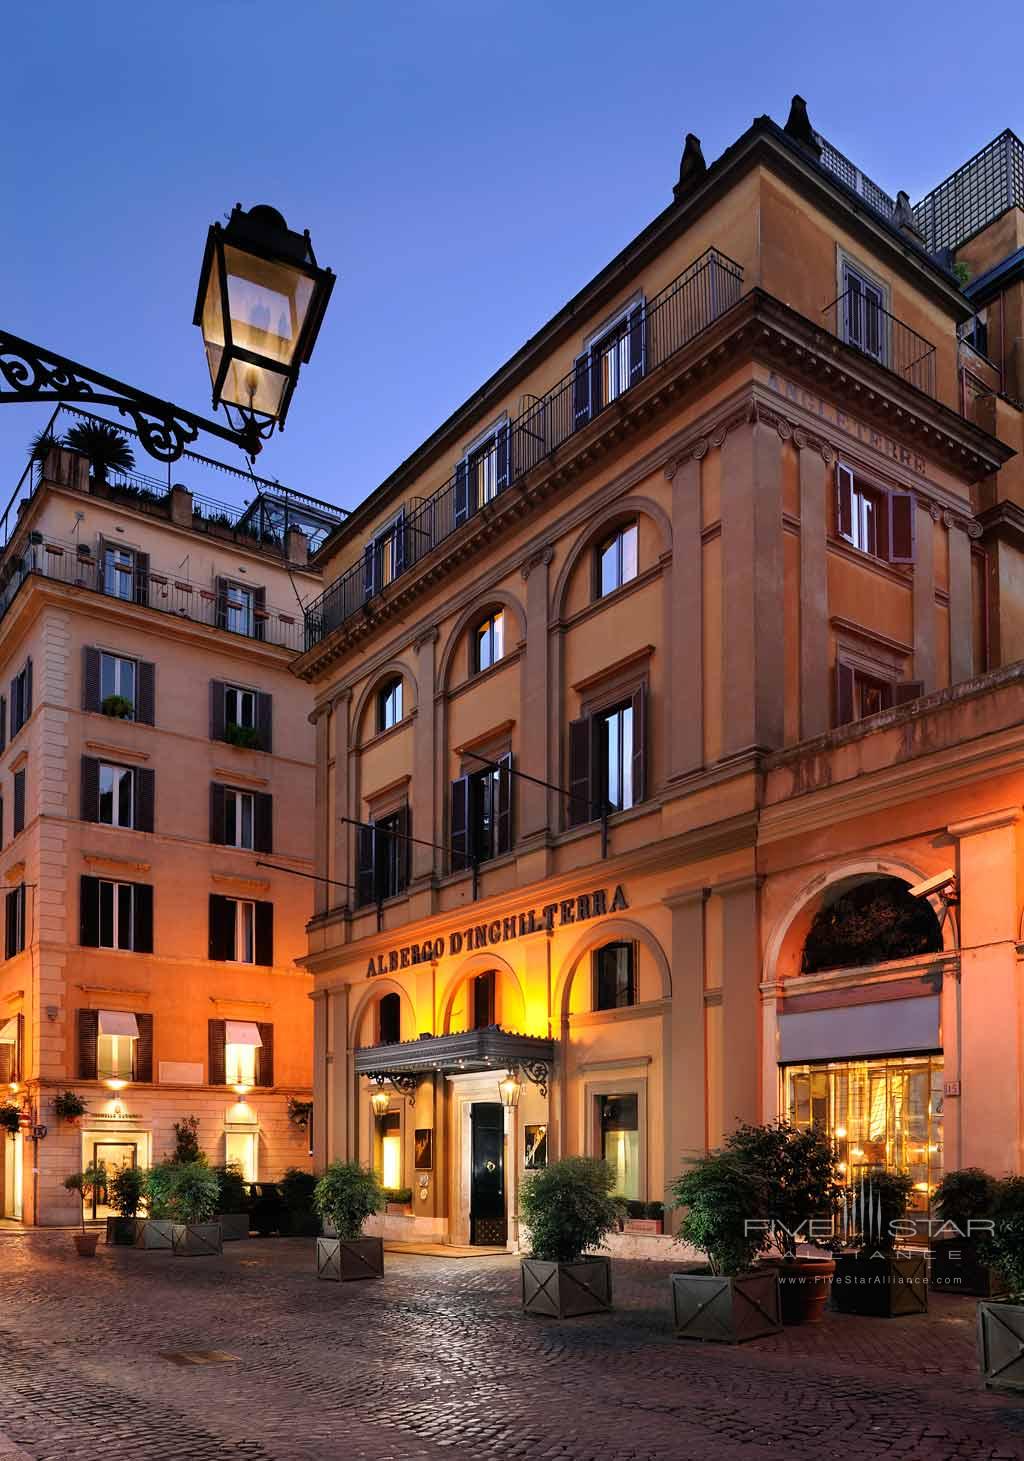 Hotel d'Inghilterra Rome